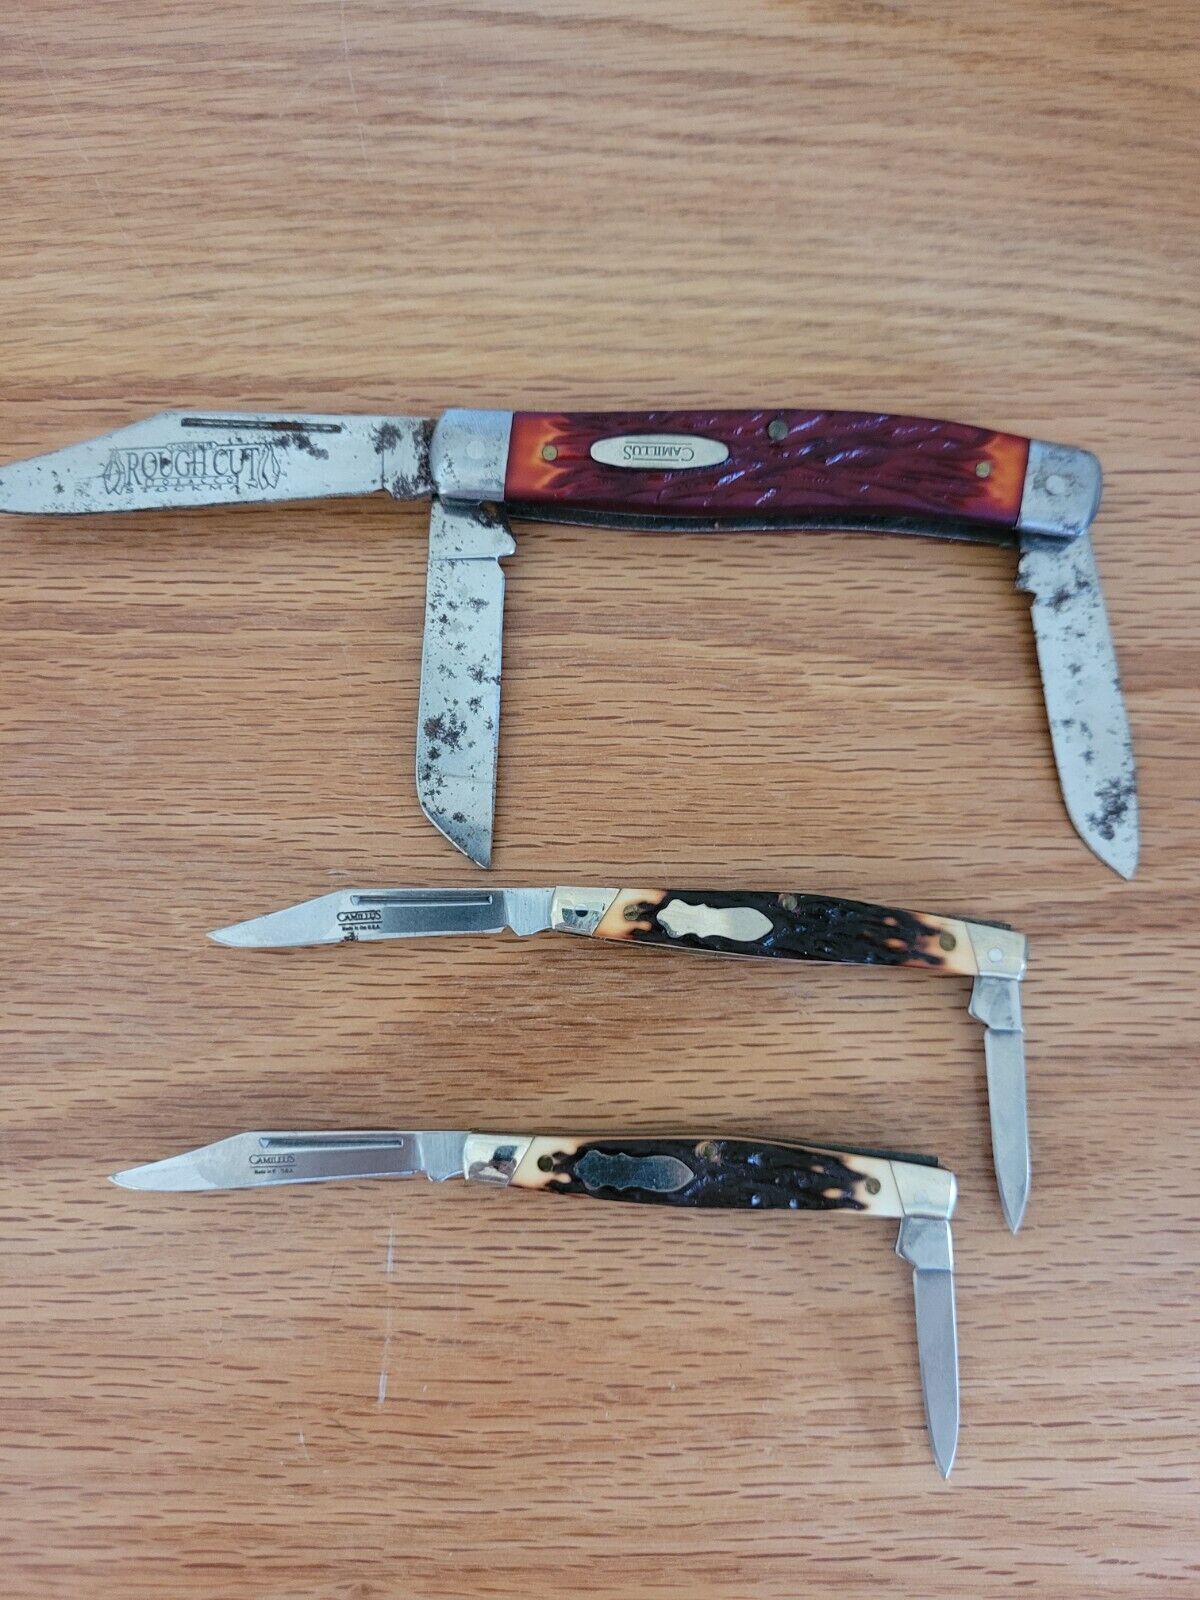 Lot of 3 vintage Camillus pocket knives, Rough Cut